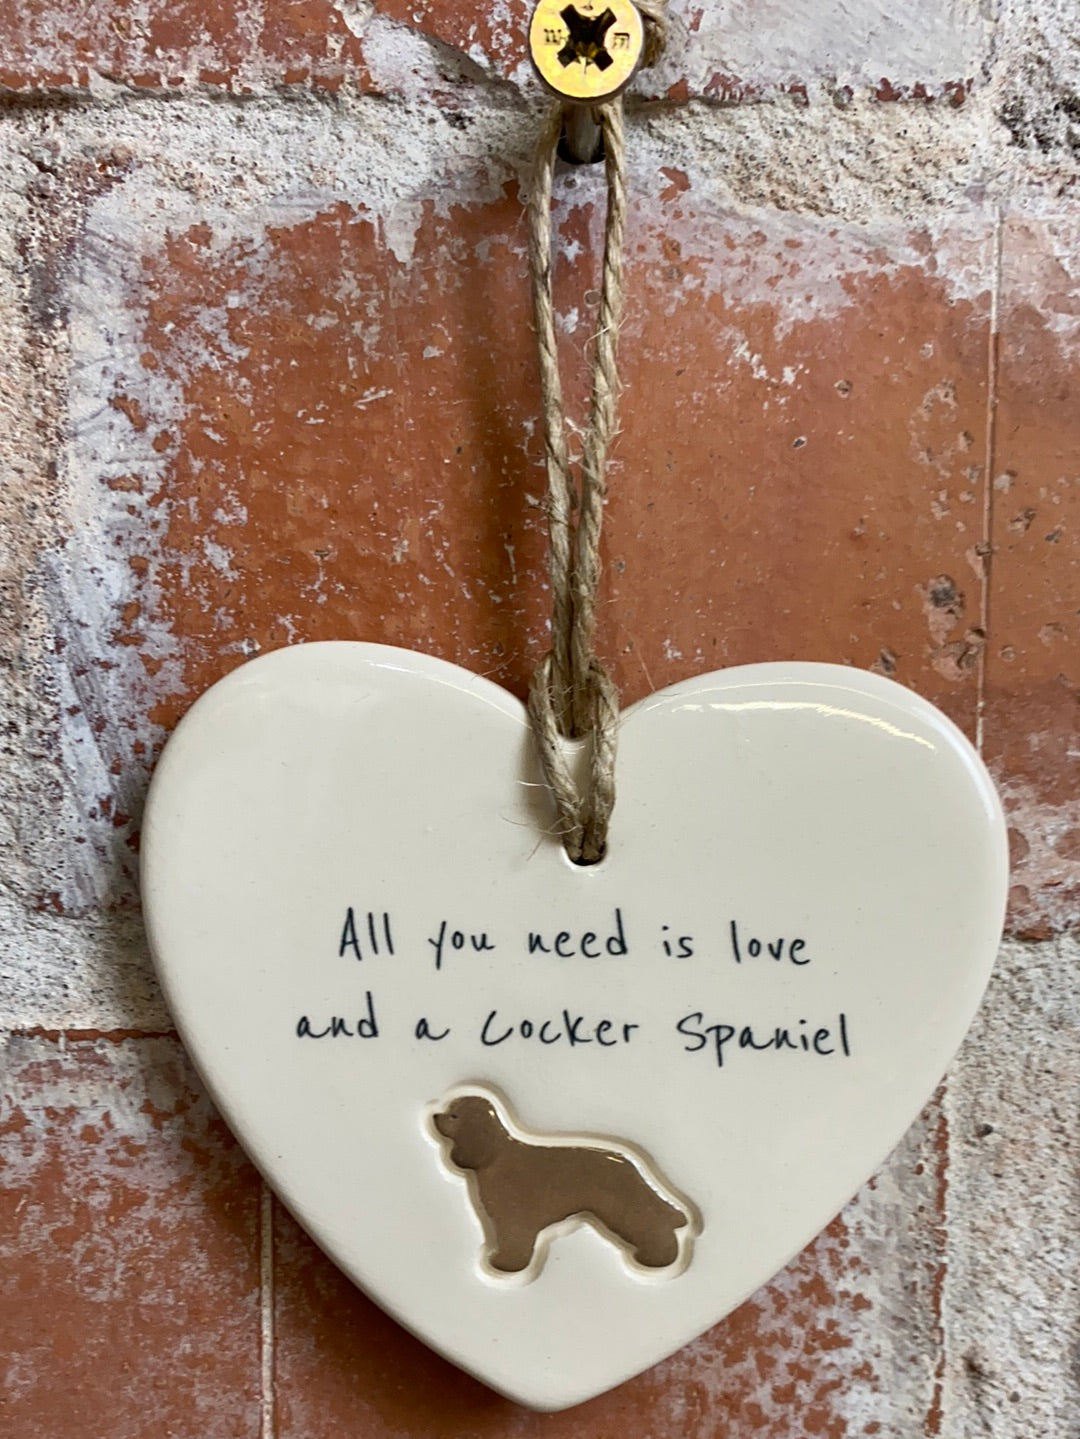 Cocker Spaniel heart